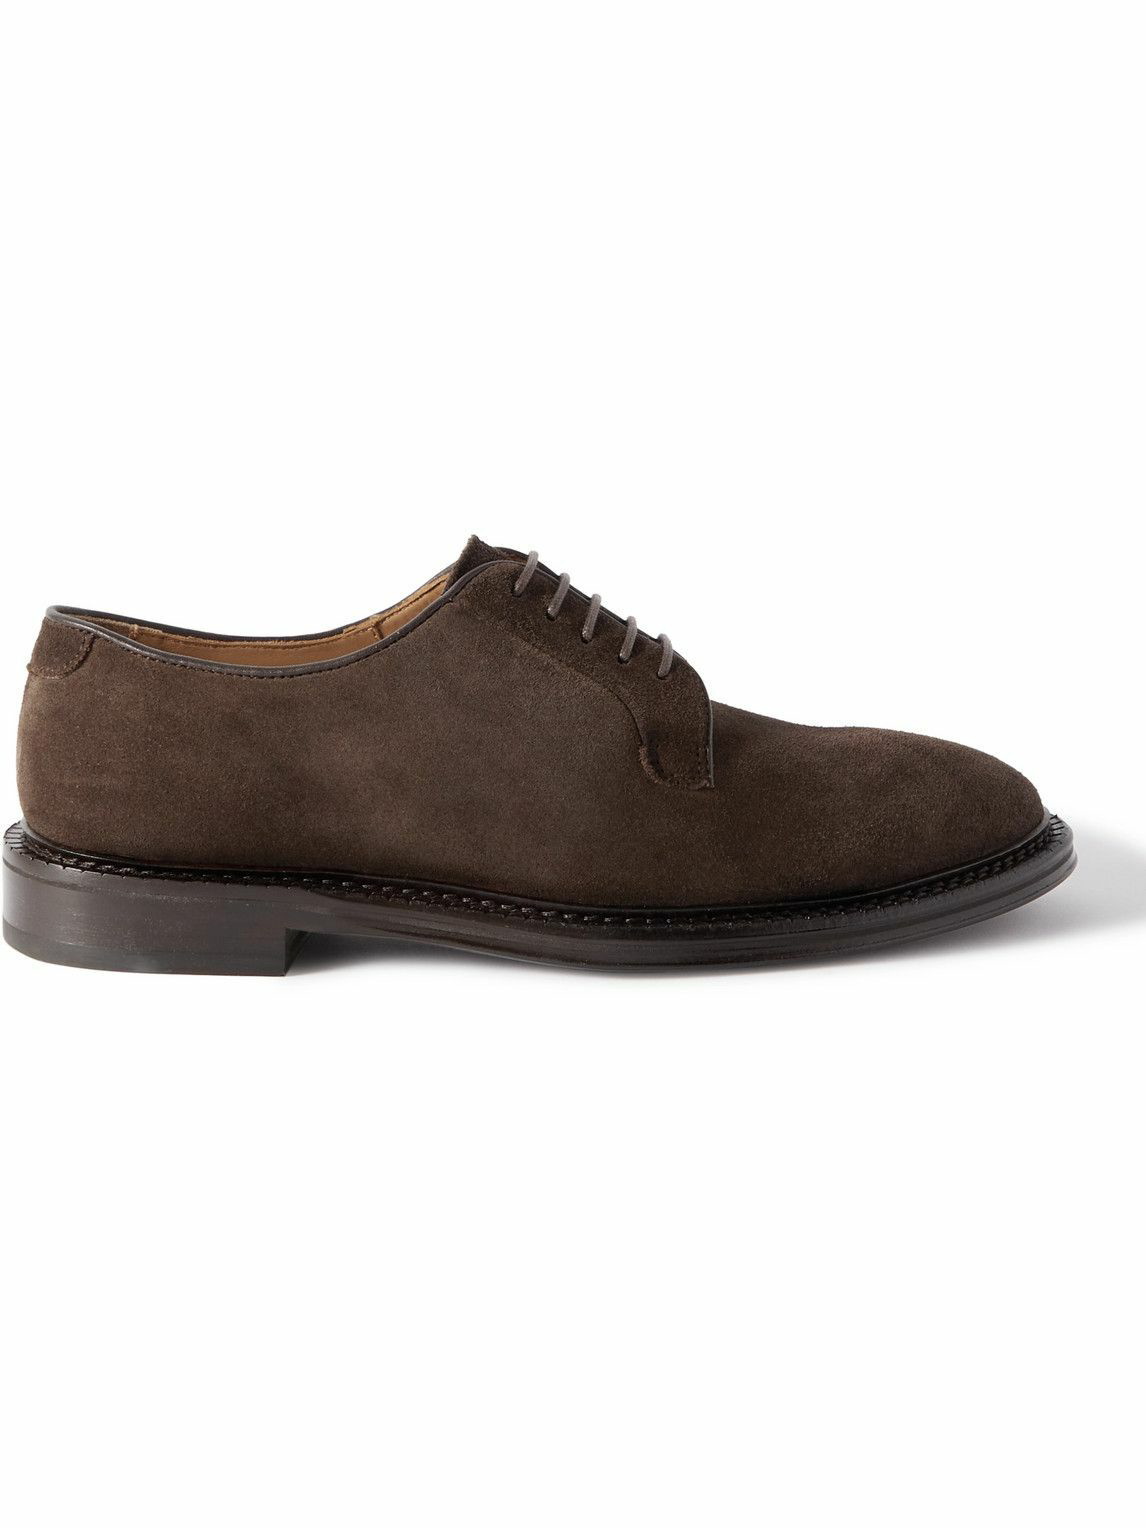 Mr P. - Suede Derby Shoes - Brown Mr P.